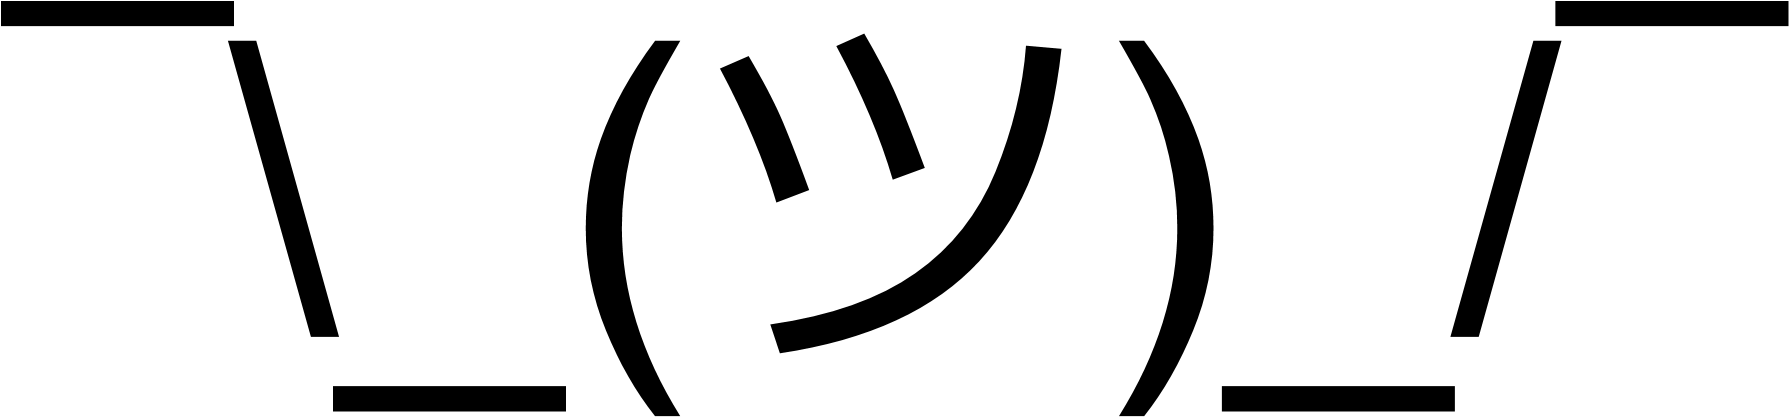 Emoticon Shrug Symbol PNG image